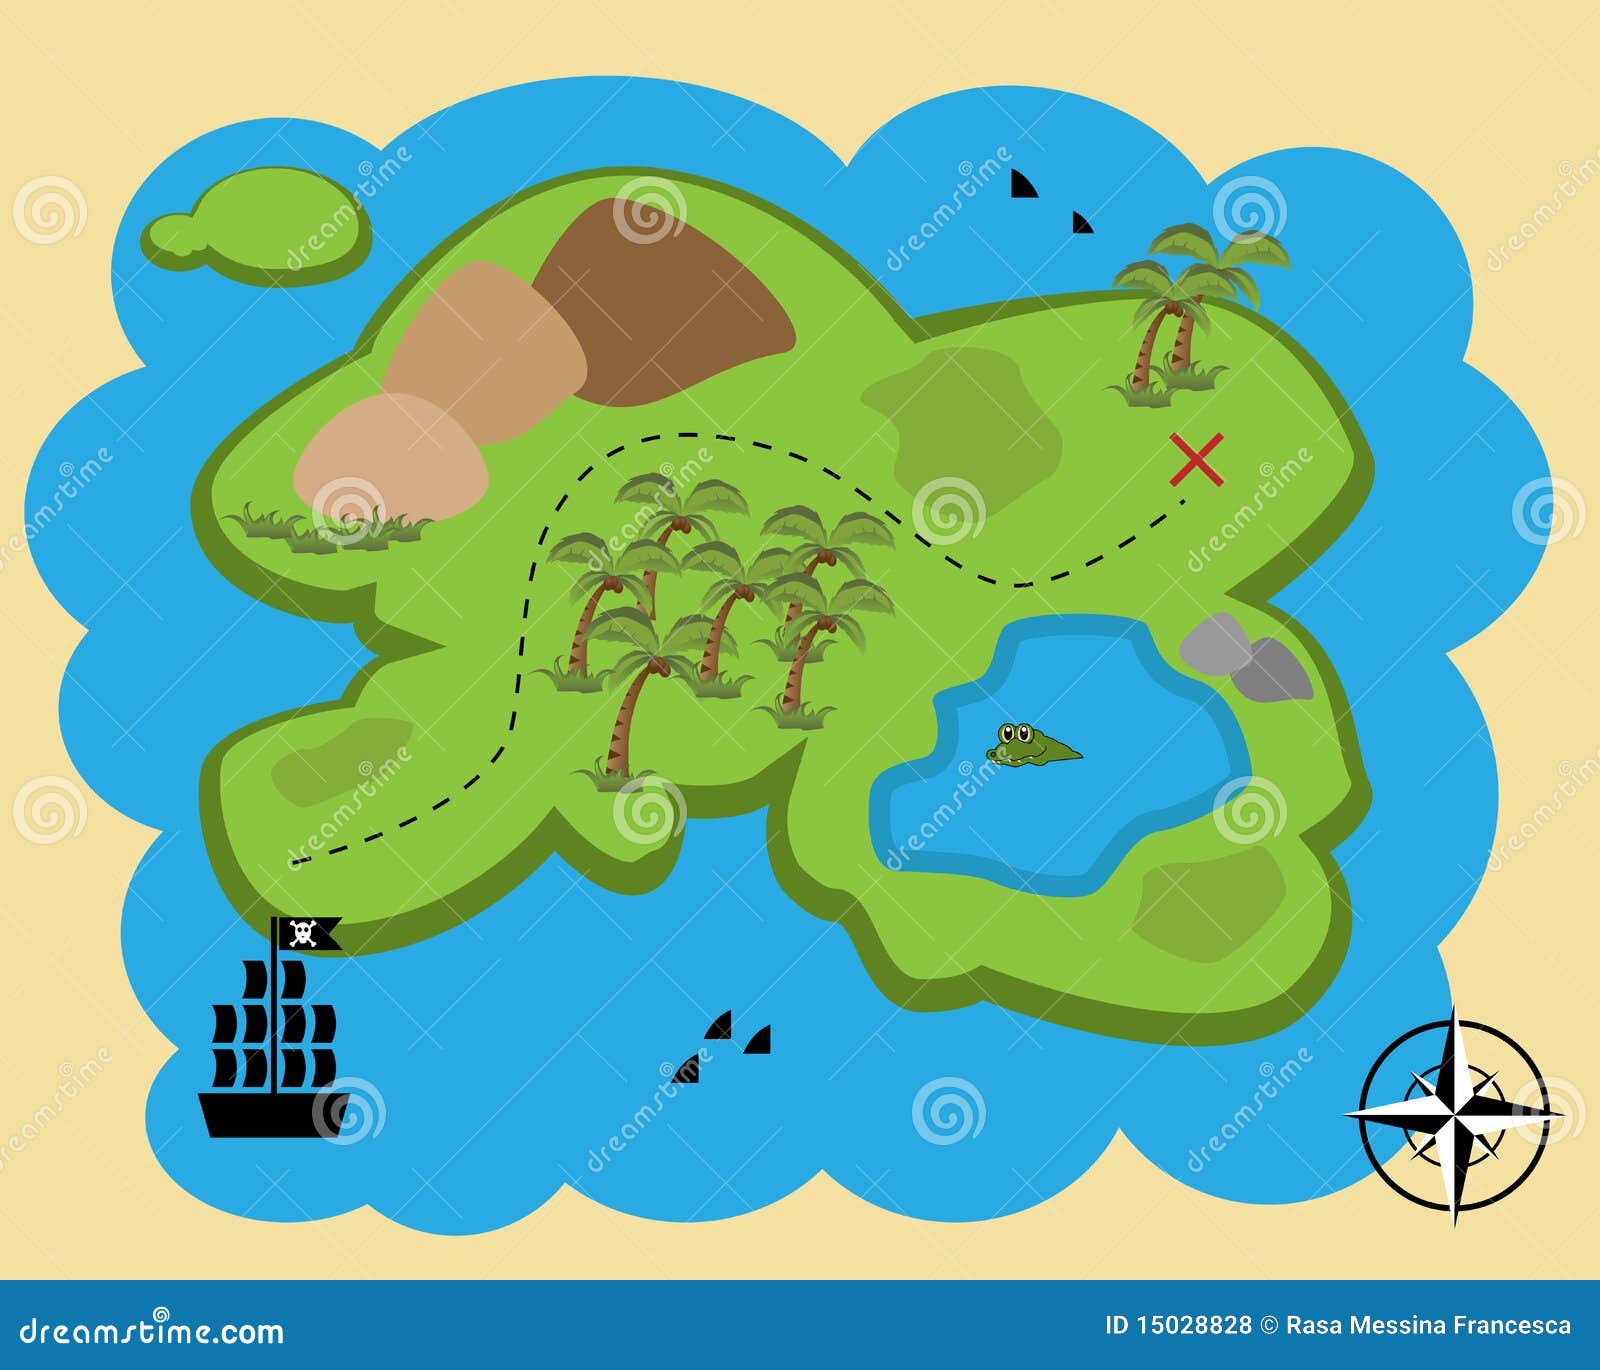 Cartoon treasure map stock vector. Illustration of island - 15028828